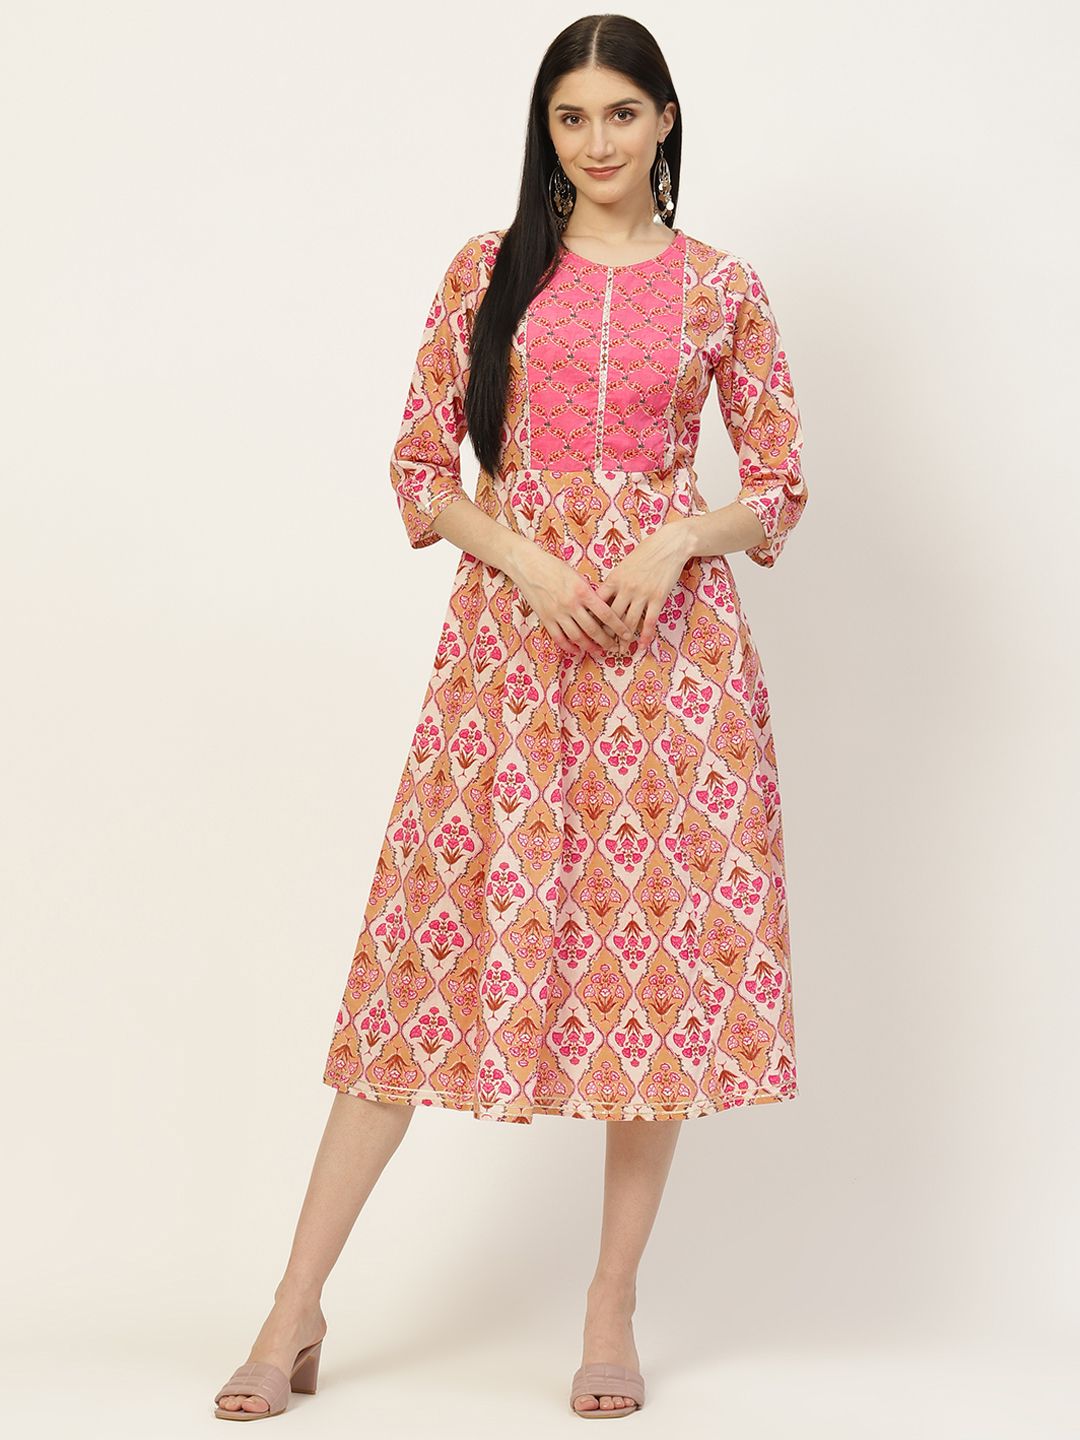 Maaesa White & Pink Ethnic Motifs Printed A-Line Midi Dress Price in India